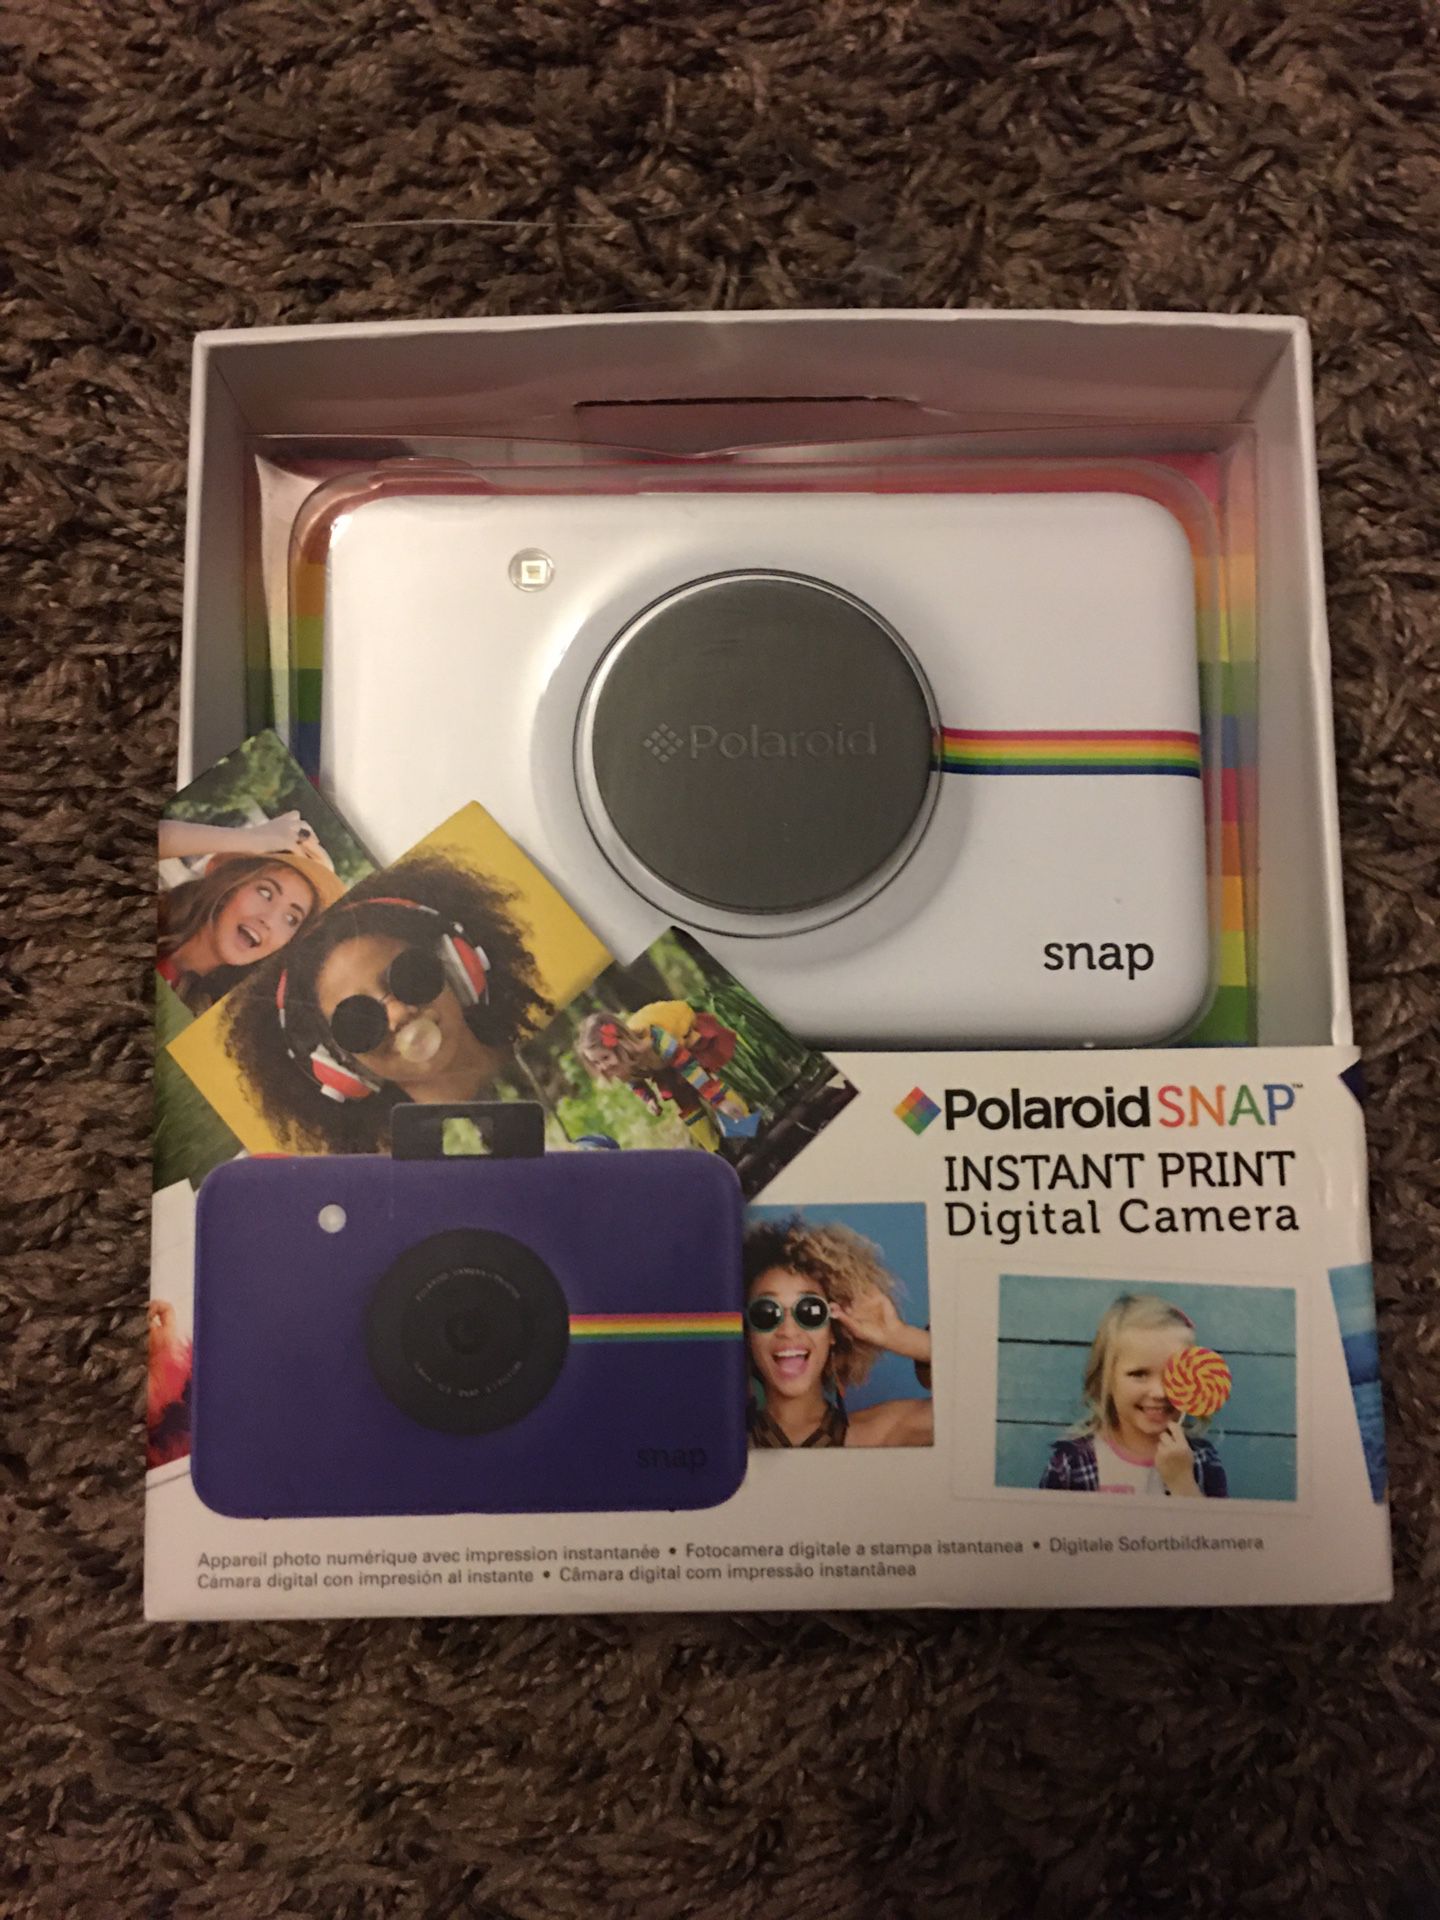 Polaroid SNAP instant print digital camera